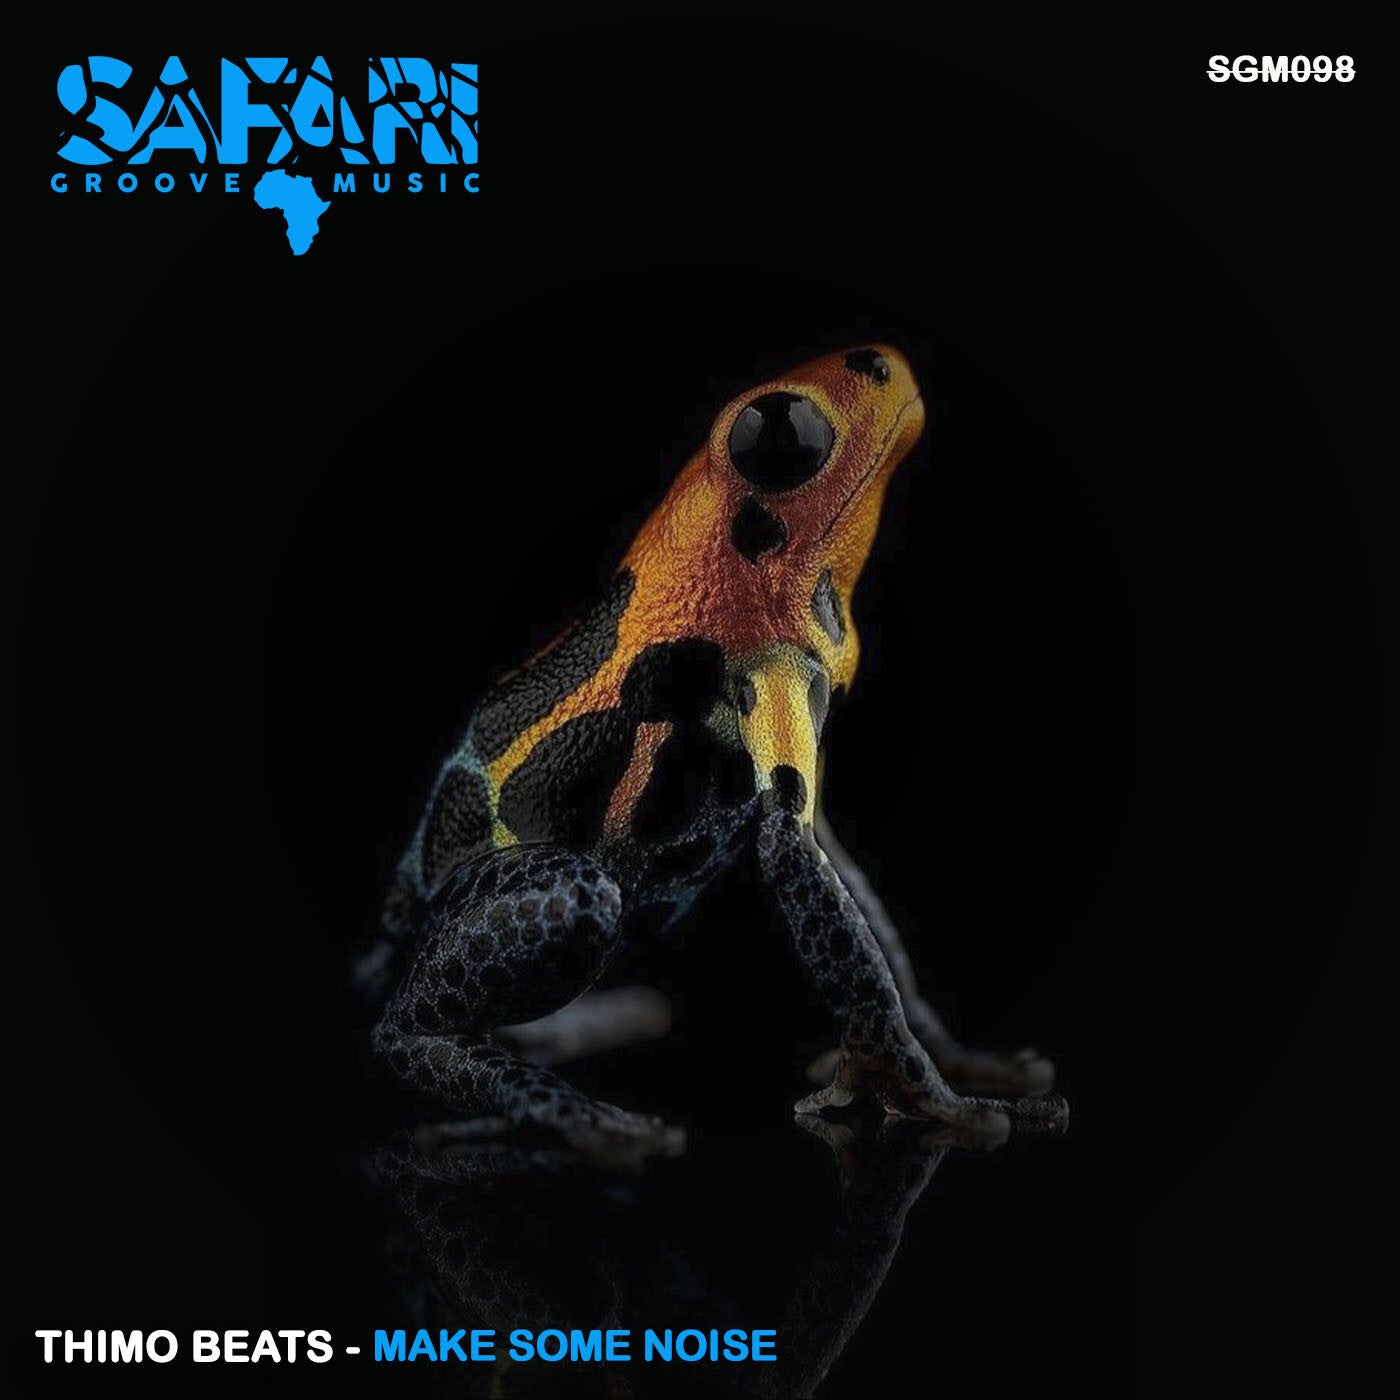 image cover: Thimo Beats - Make Some Noise on Safari Groove Music